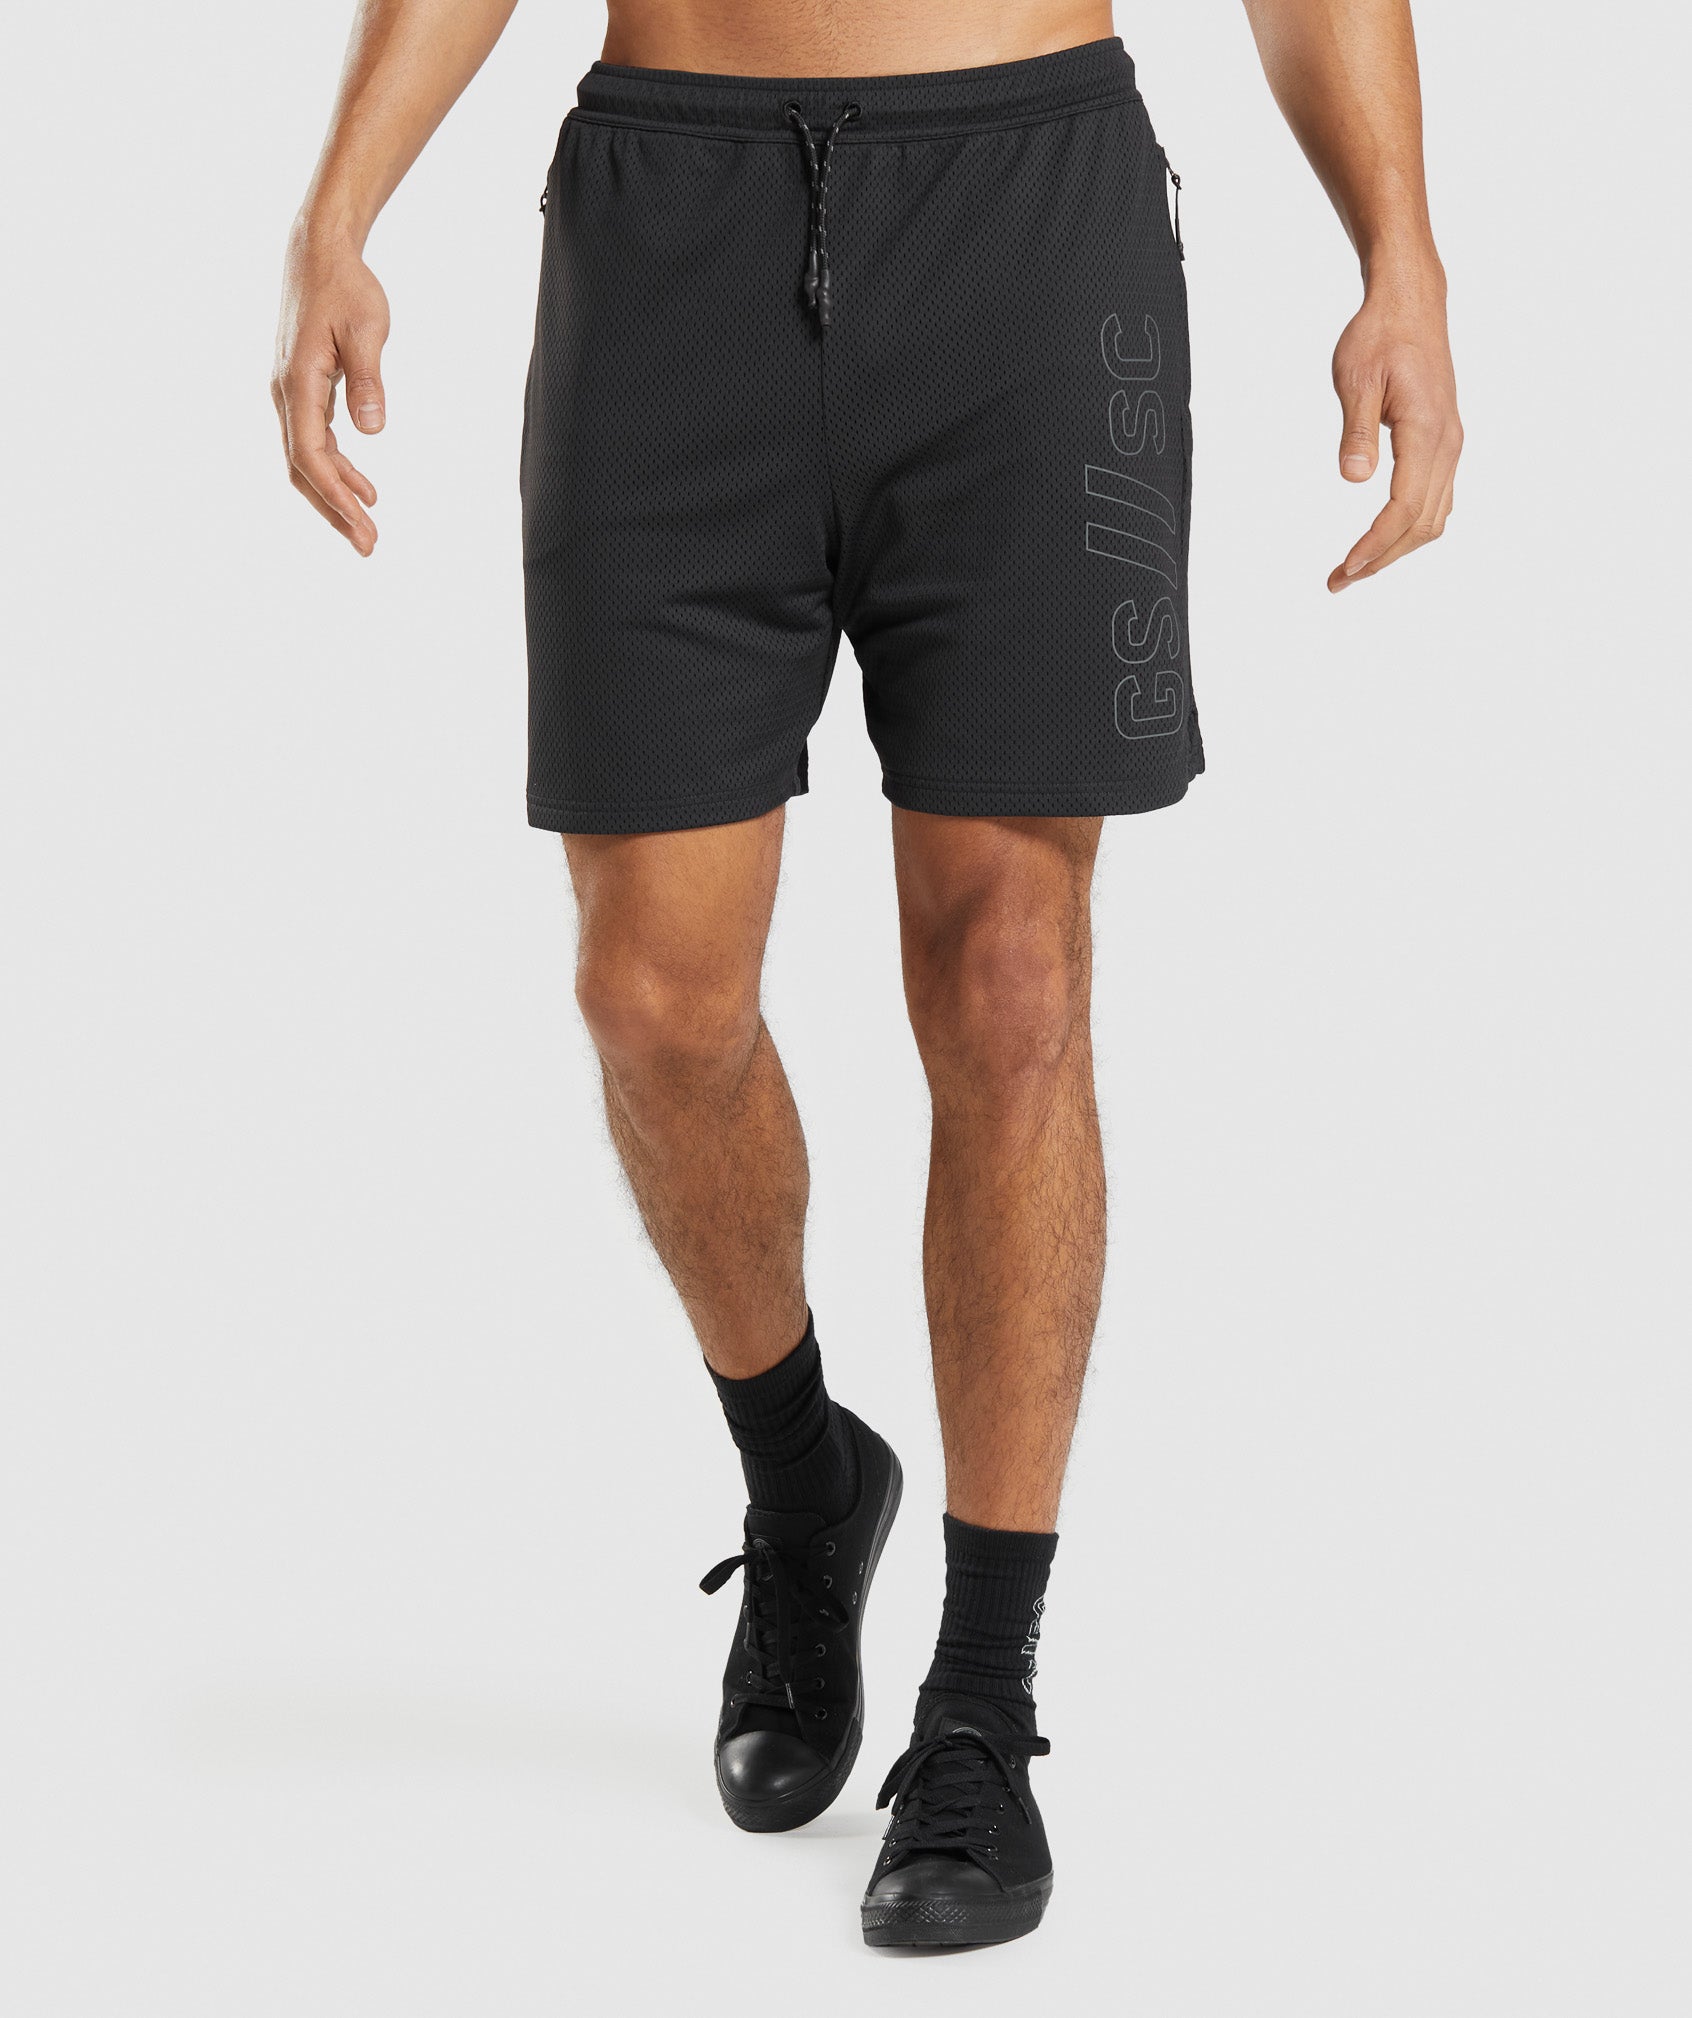 Gymshark//Steve Cook Mesh Shorts in Black - view 1